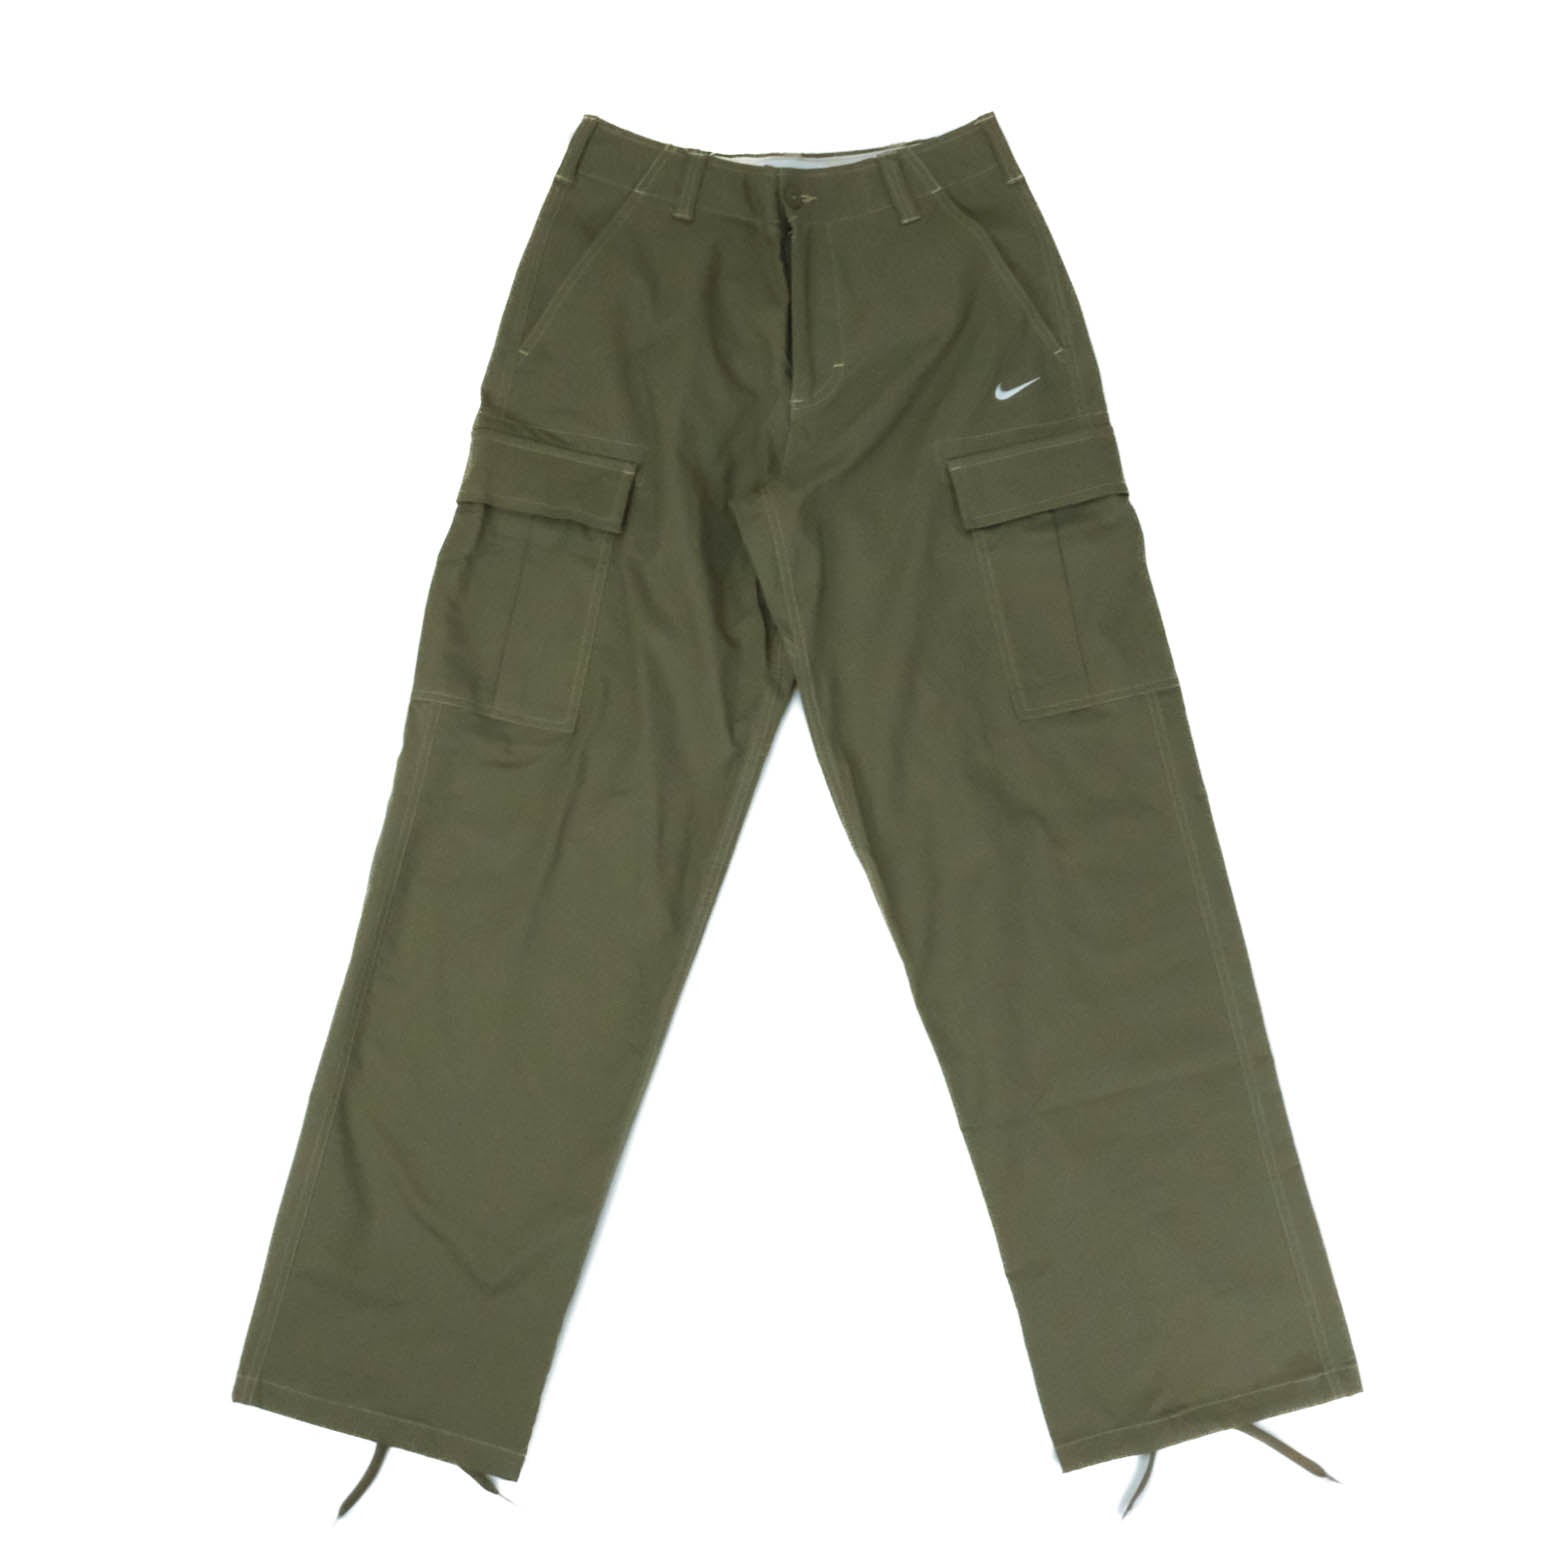 Nike SB Kearny Cargo Pants - Medium Olive/White